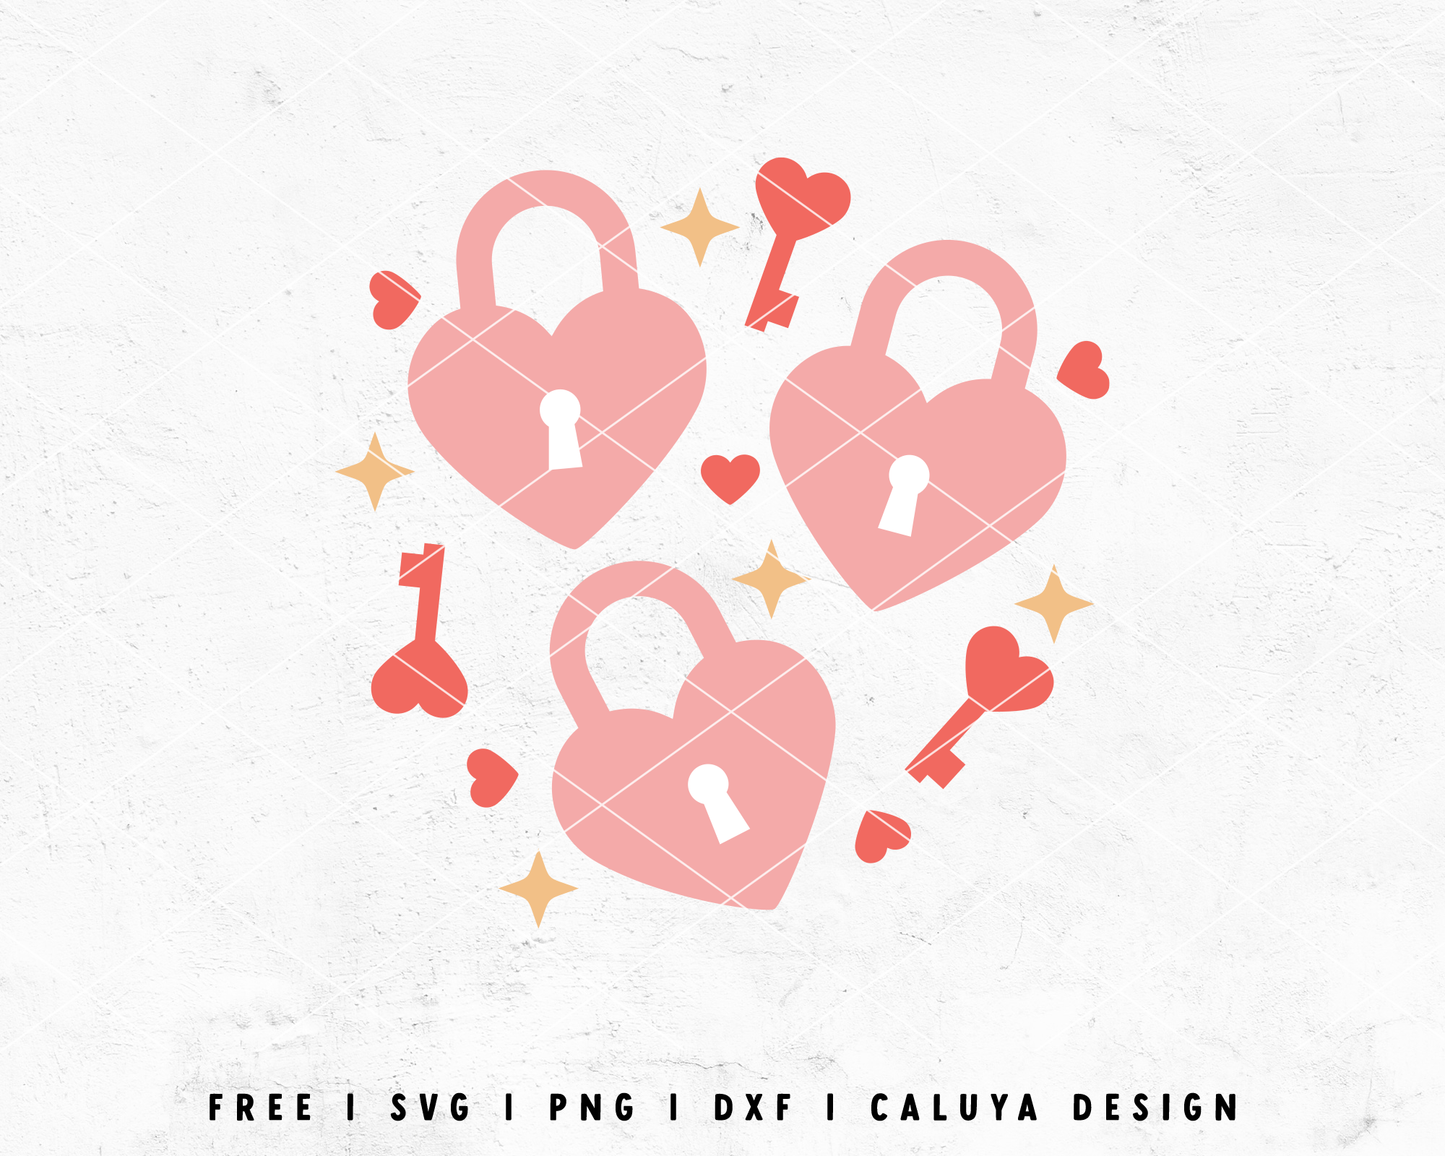 FREE Heart Lock SVG | Valentine's Day SVG Cut File for Cricut, Cameo Silhouette | Free SVG Cut File